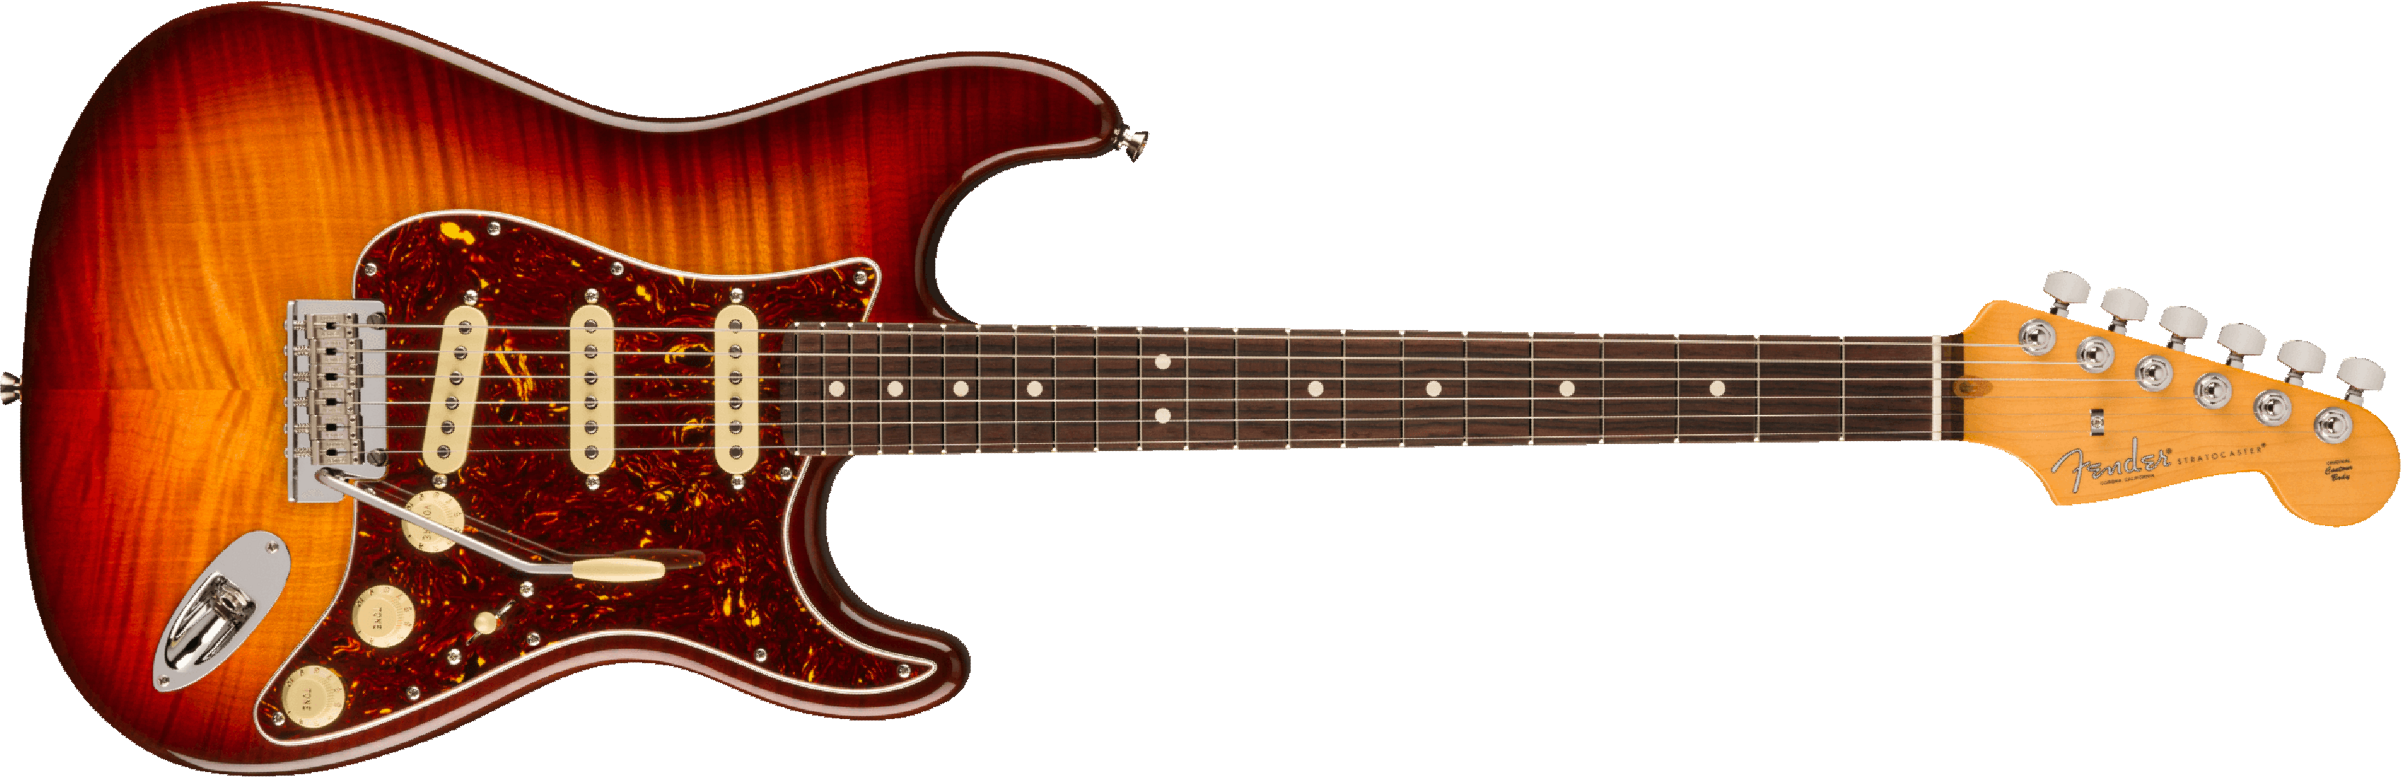 Fender Stratocaster American Pro Ii 70th Anniversary 3s Trem Mn - Comet Burst - Str shape electric guitar - Main picture